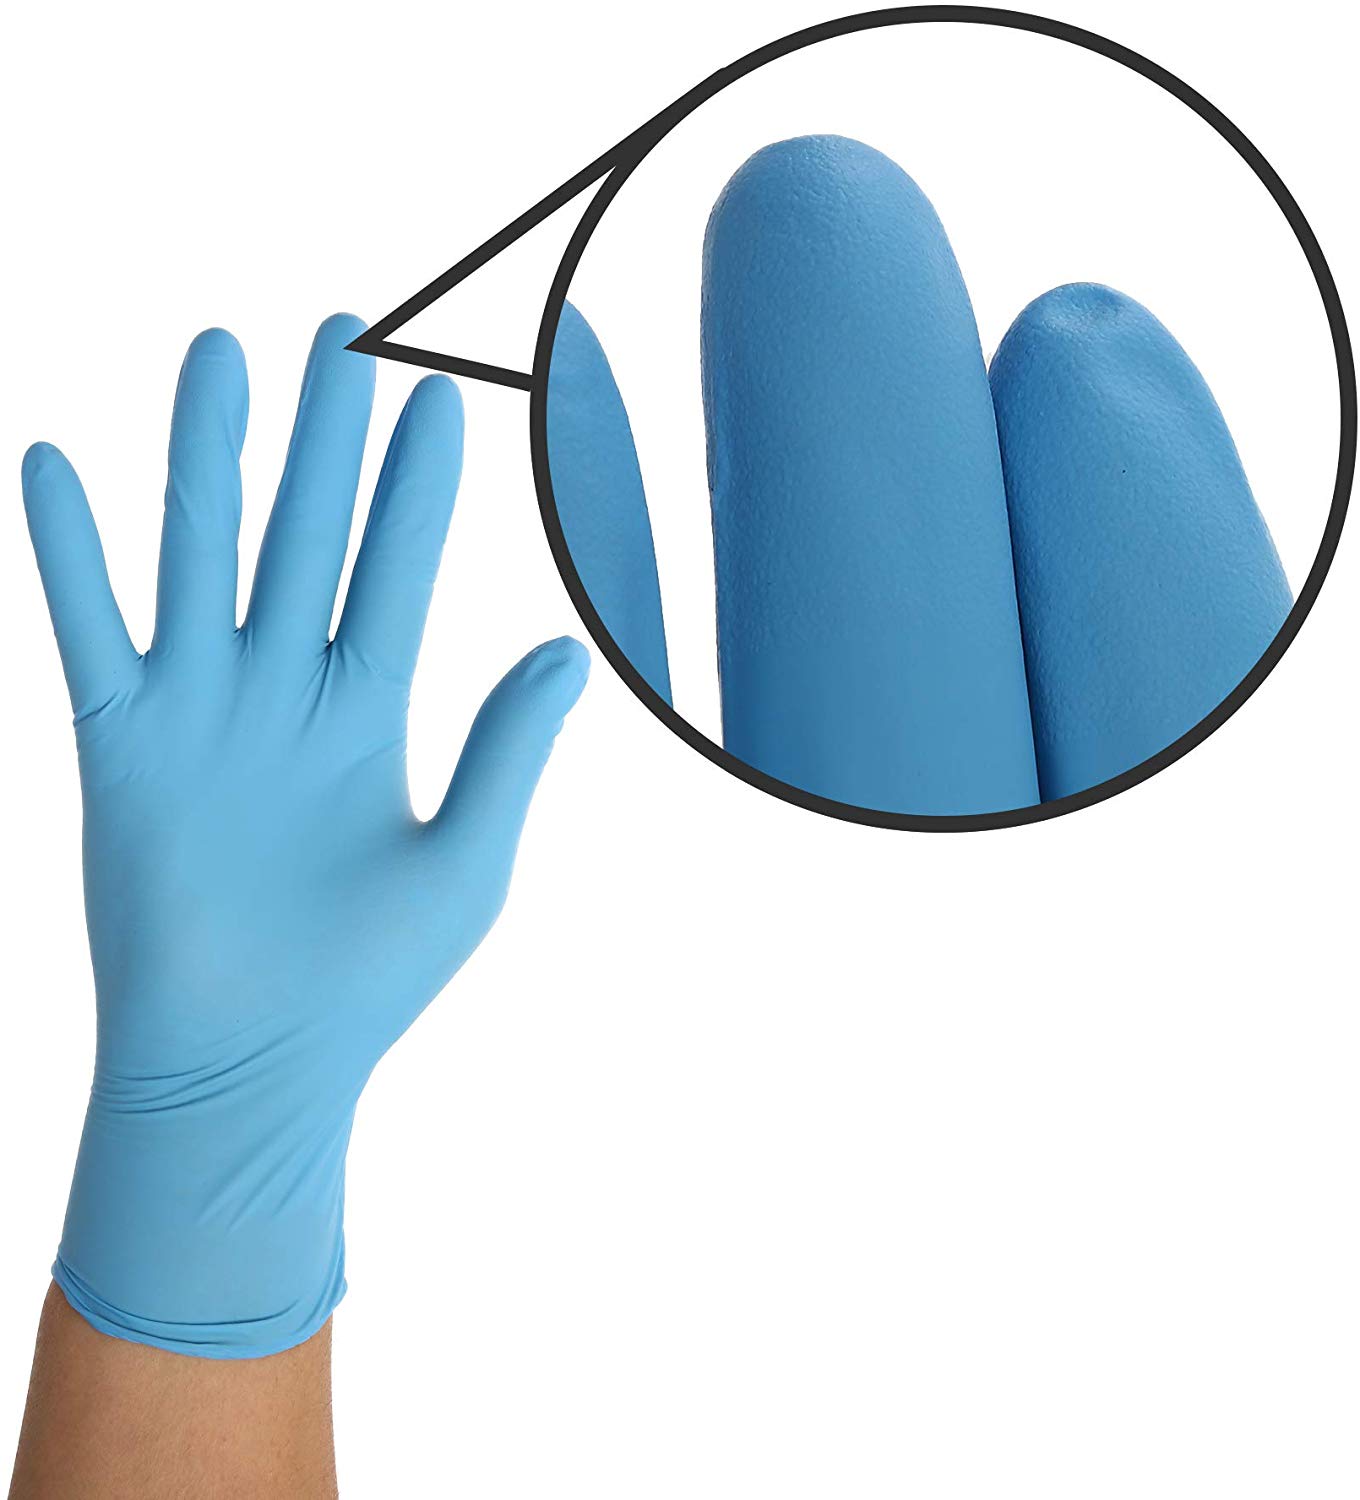 Star yu no powder check-up blue Medical gloves